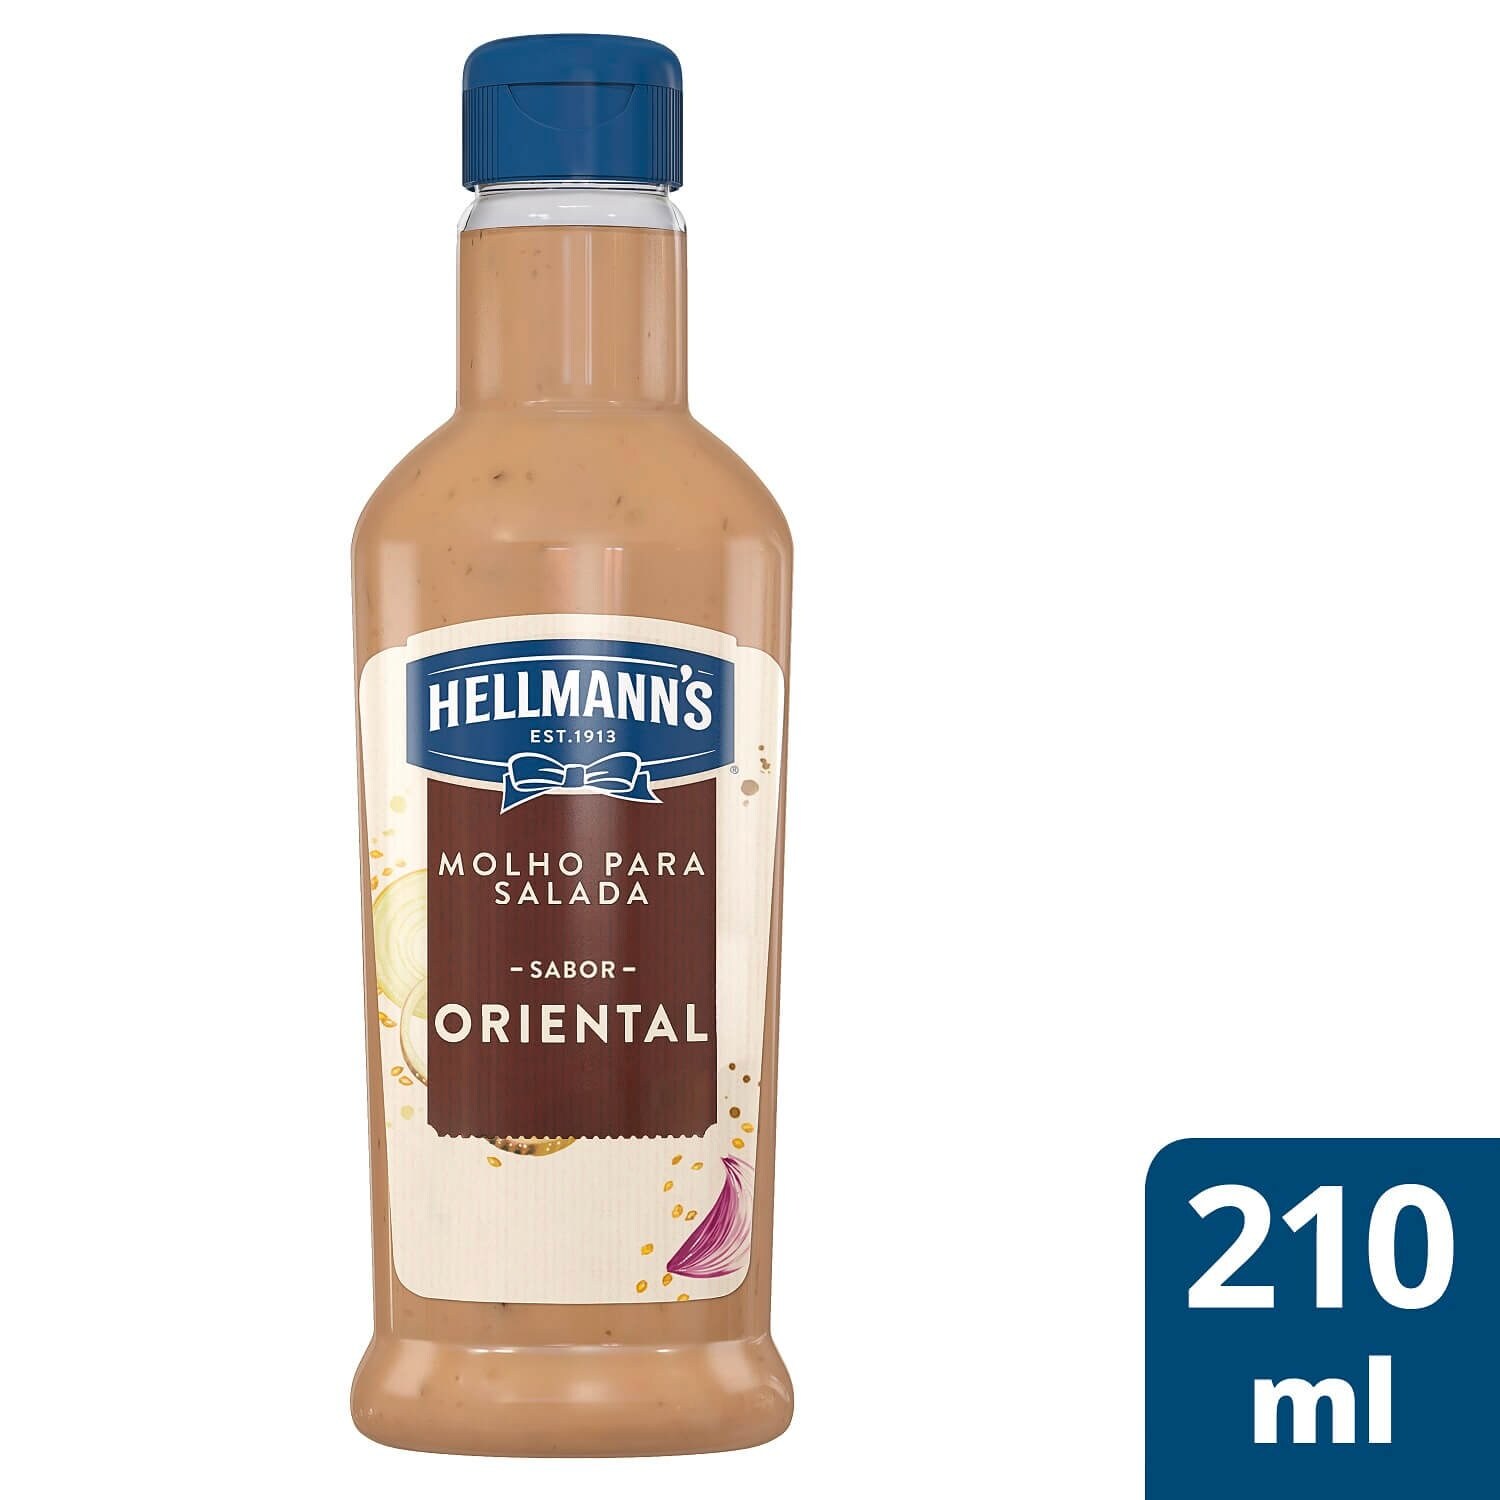 Molho para Salada Hellmann's Oriental 210 ml - 